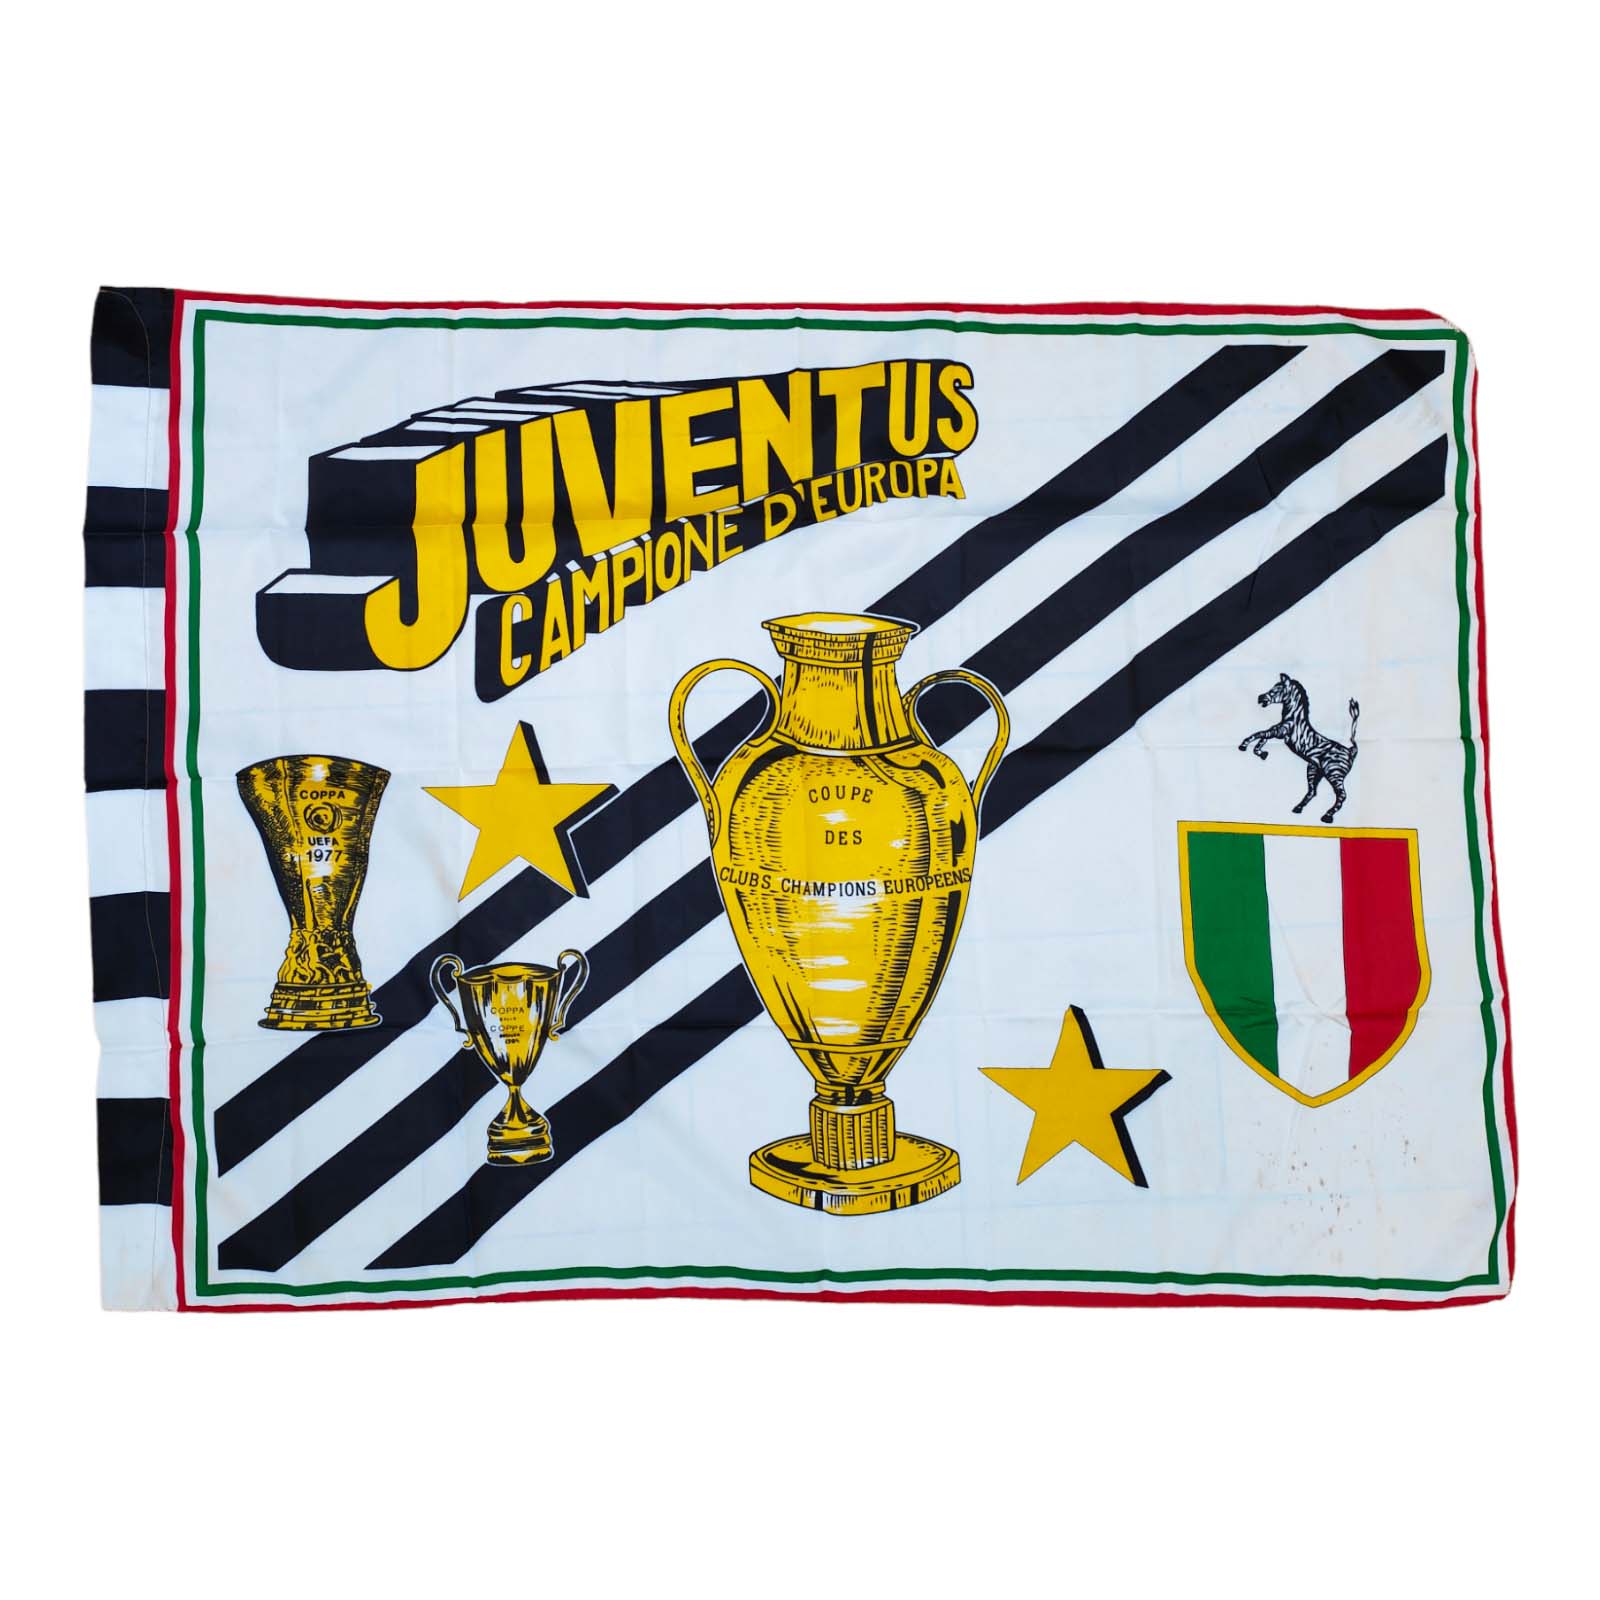 Juventus bandiera 1984-85 Champions League